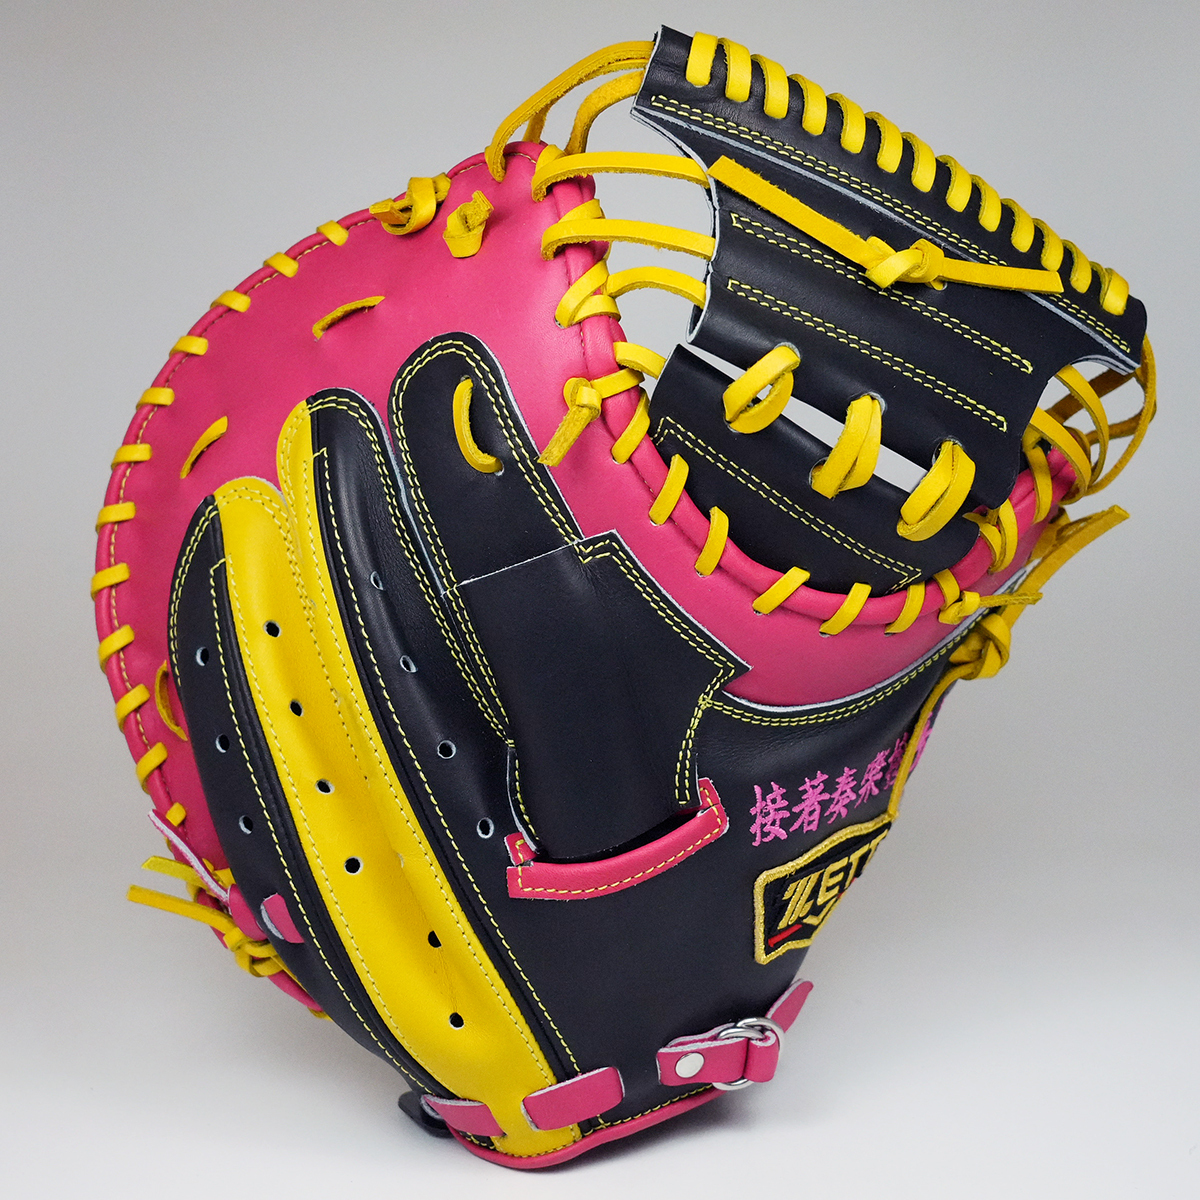 Taiwan Baseball - ZETT, HATAKEYAMA, WOODZ Baseball Gloves, Accessories.